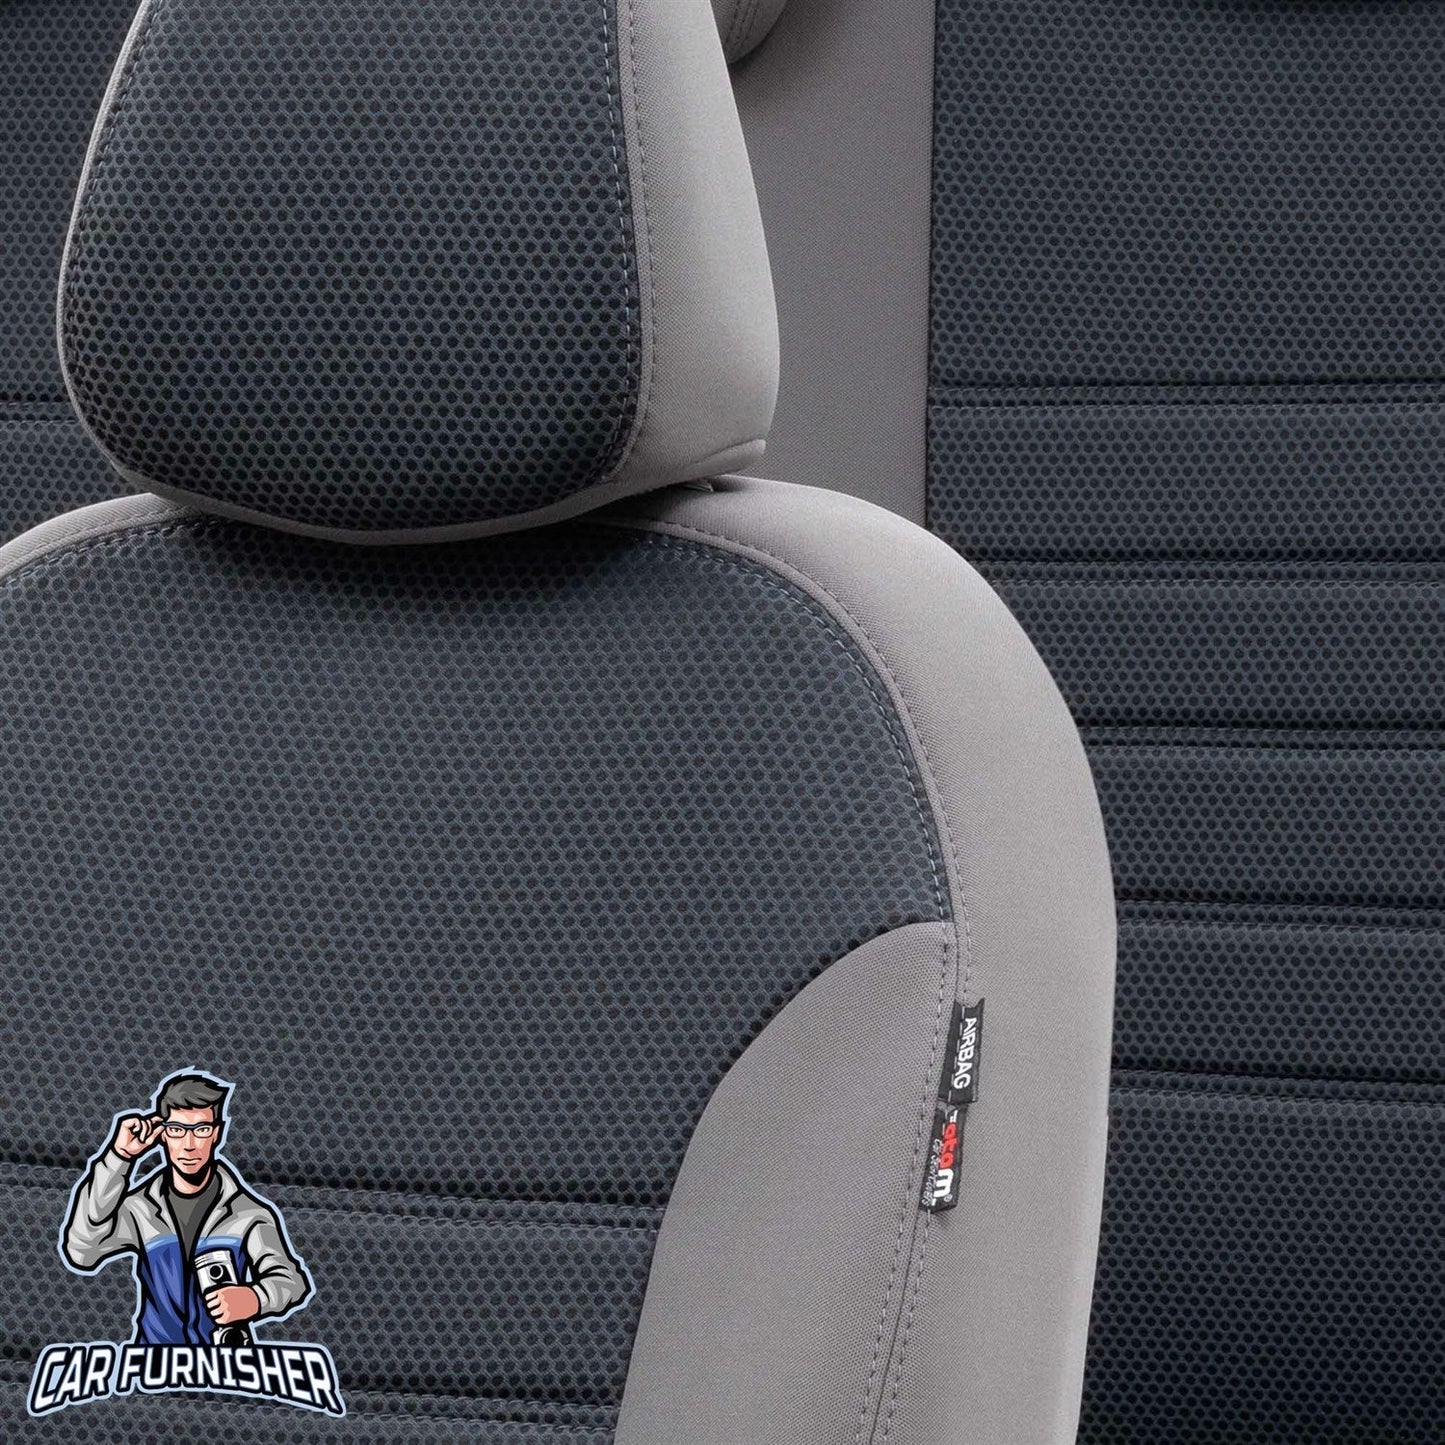 Seat Ibiza Seat Covers Original Jacquard Design Smoked Jacquard Fabric